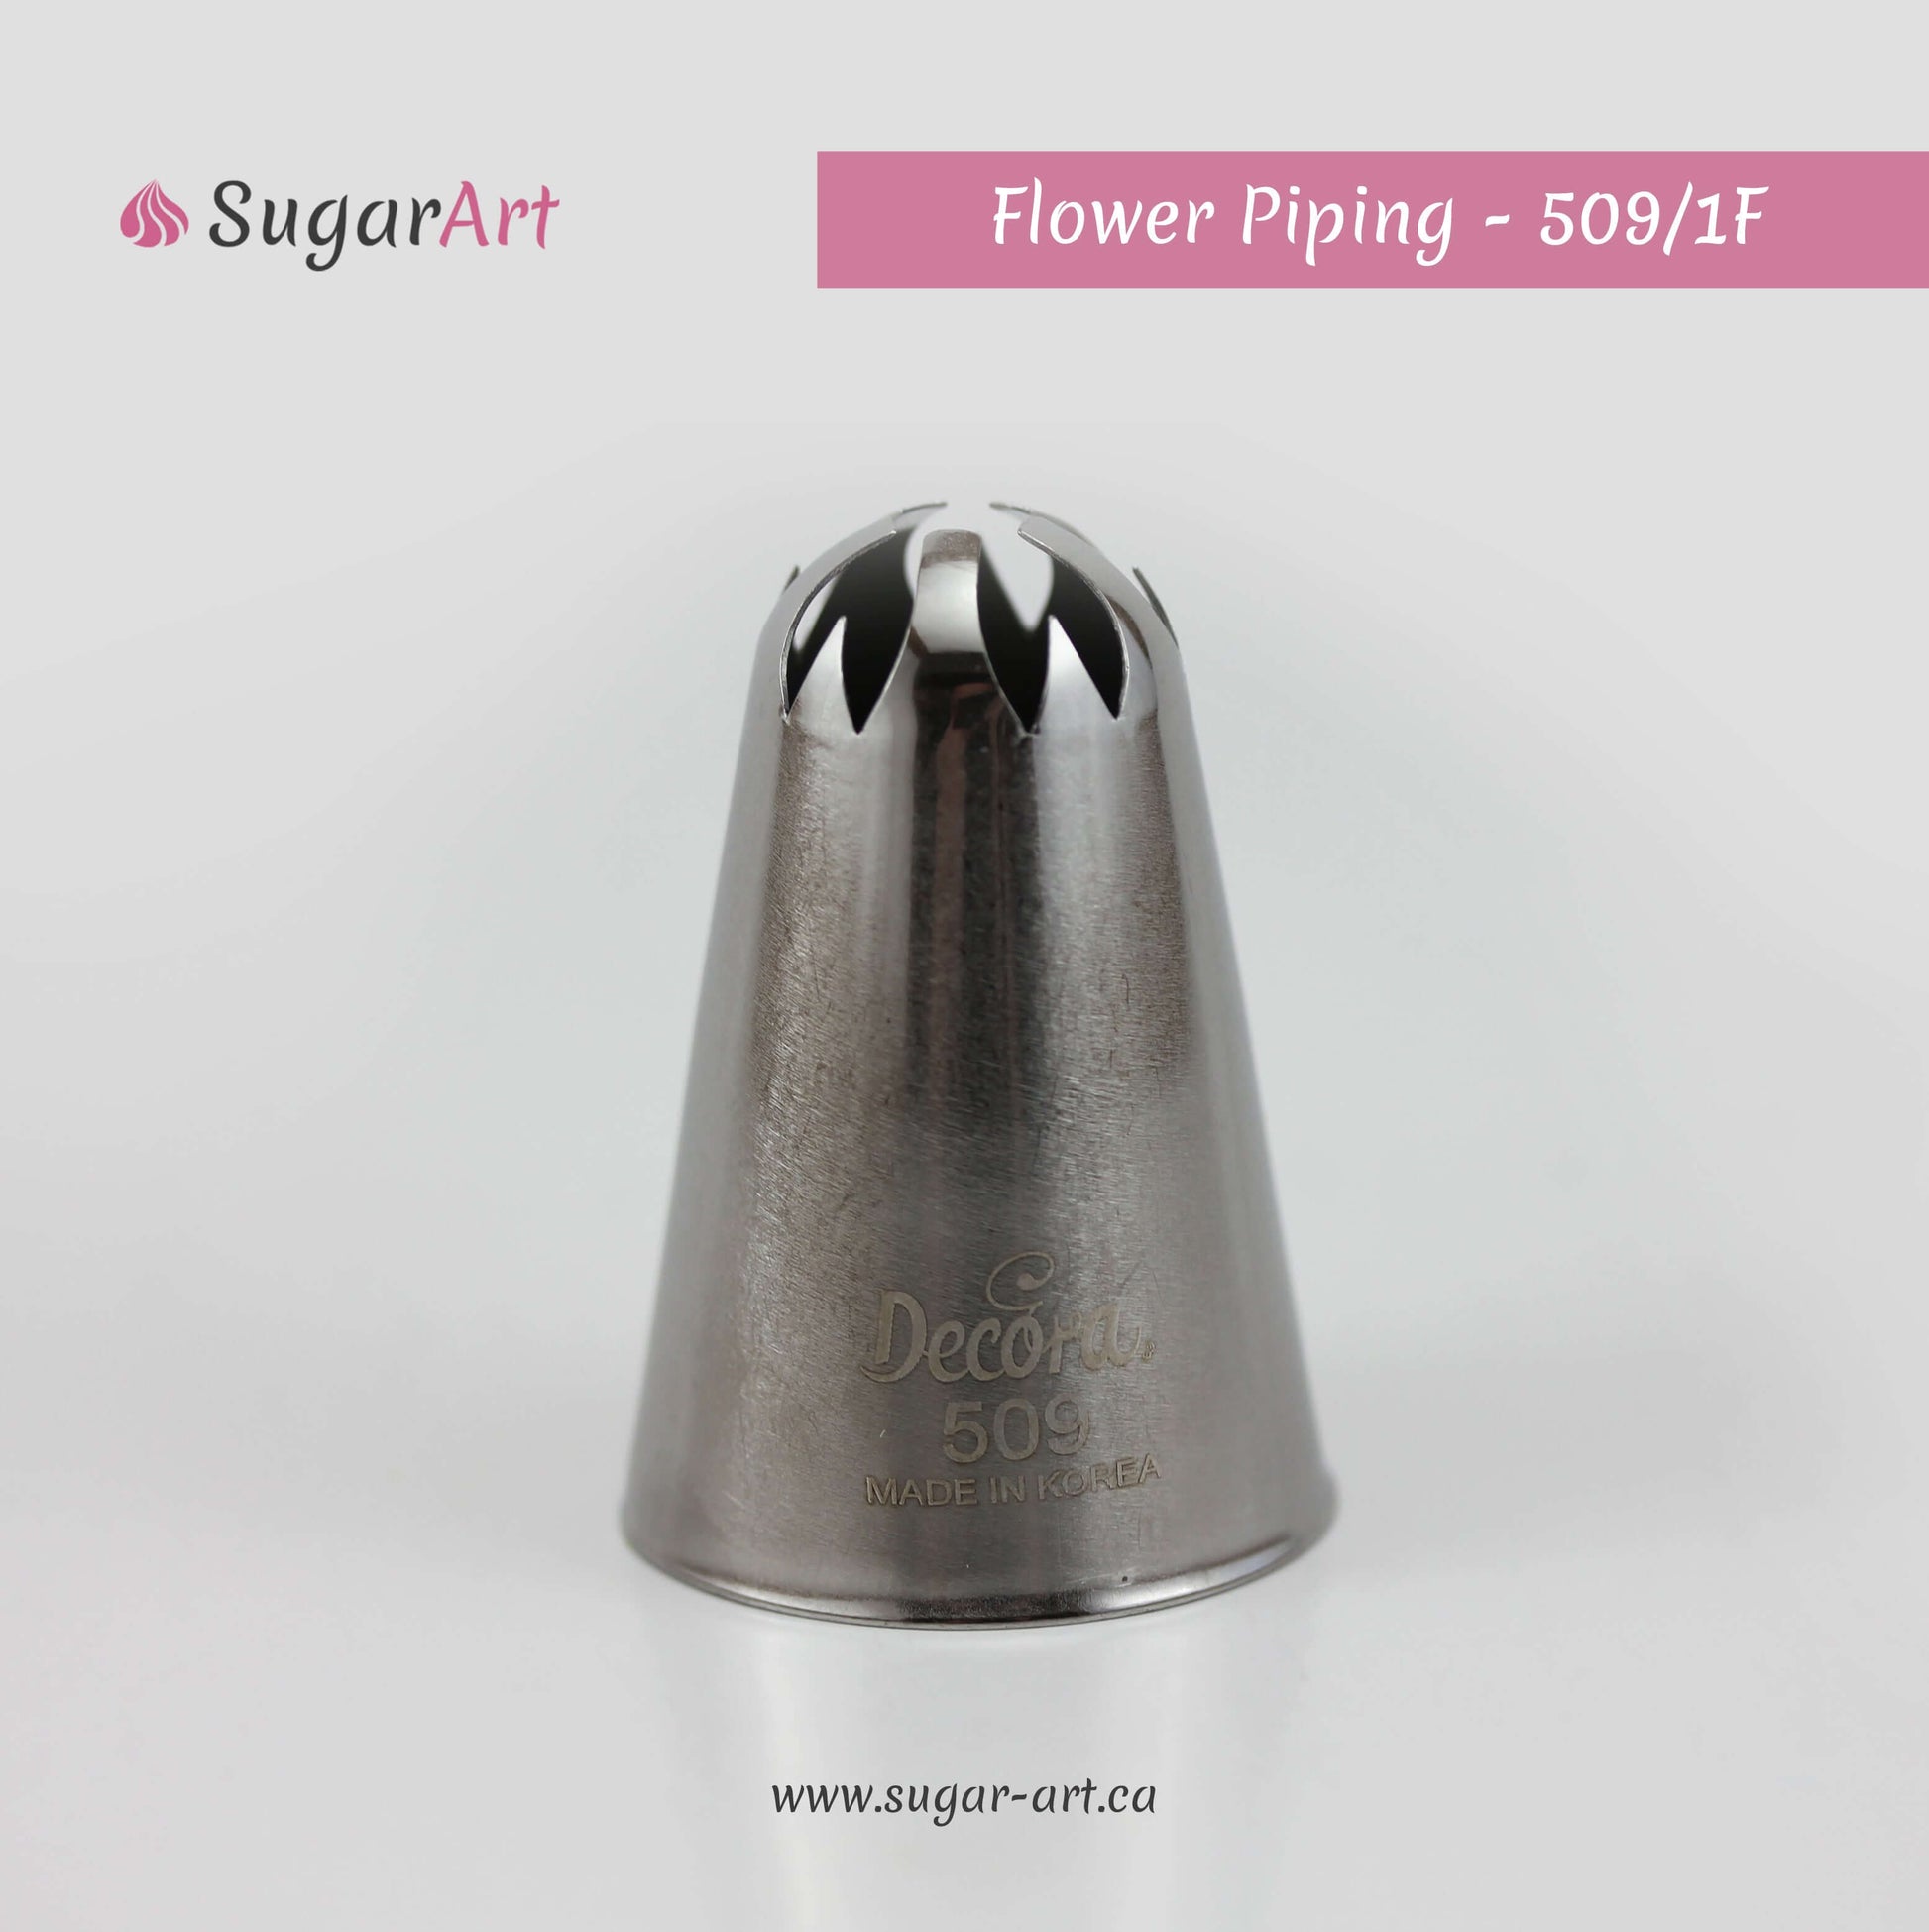 Flower Piping Nozzle "509/1F"-Piping Tips-Sugar Art